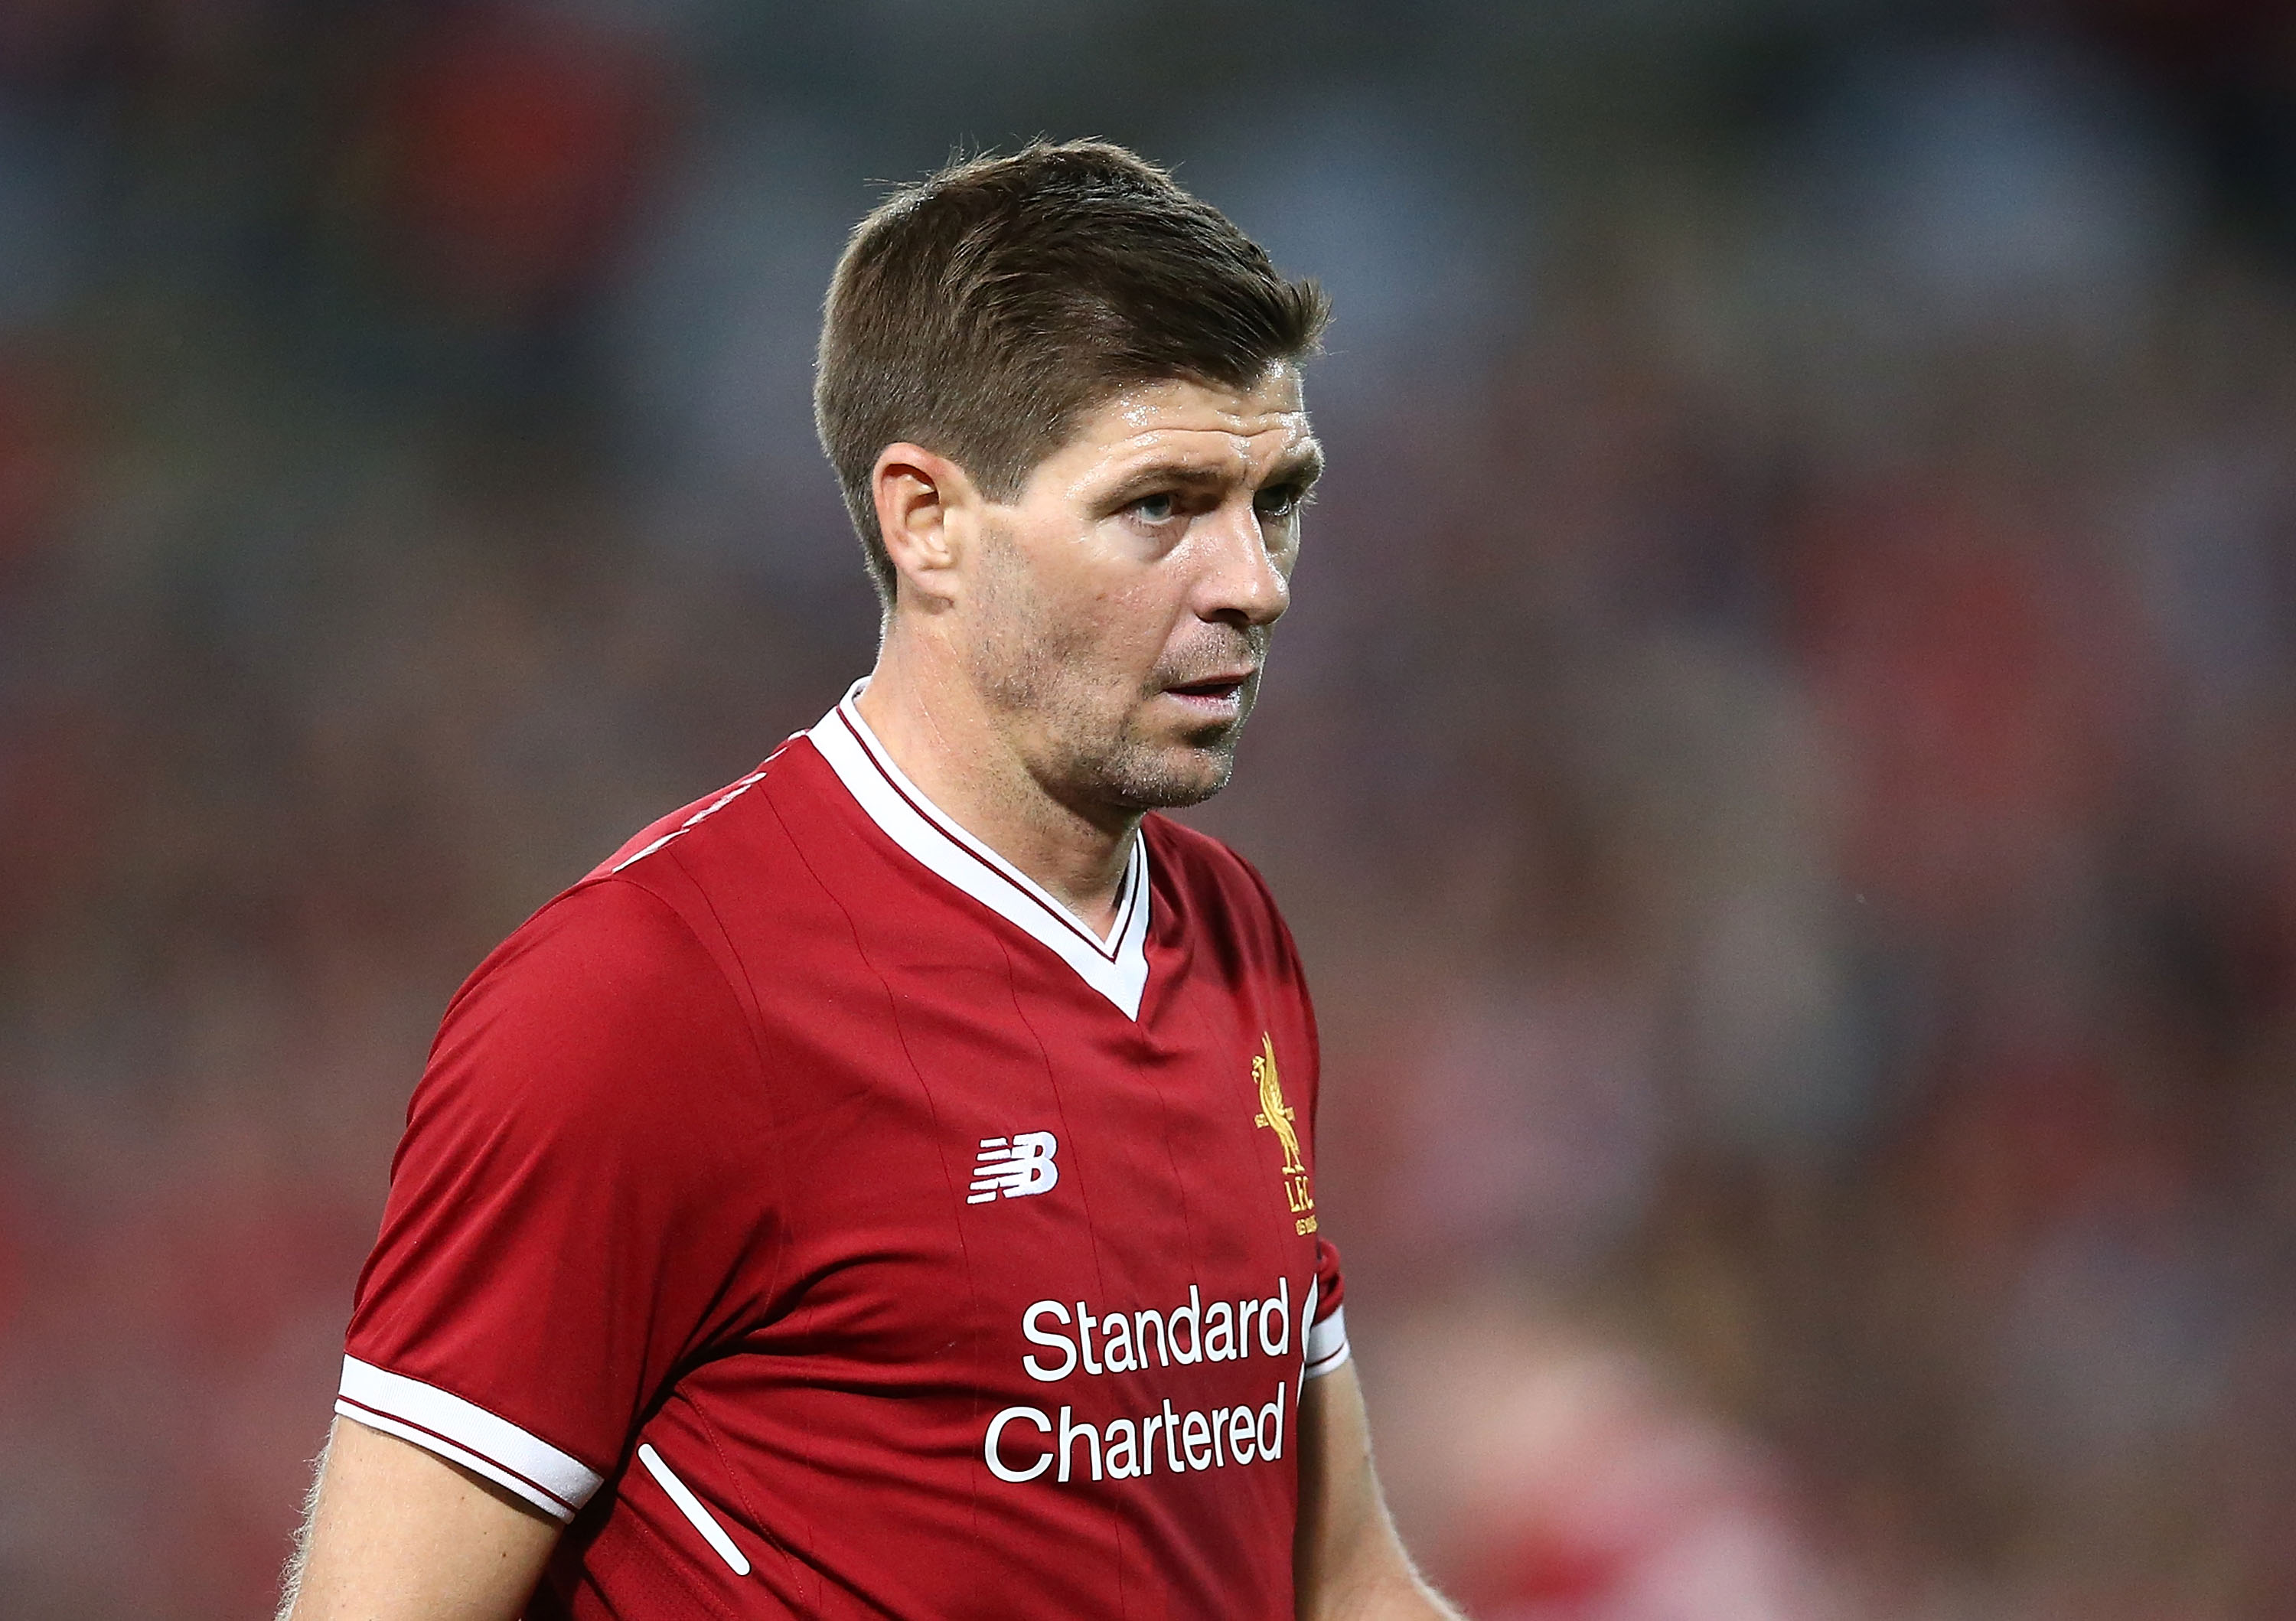 Steven Gerrard - Captain. Leader. Legend (Photo by Mark Metcalfe/Getty Images)